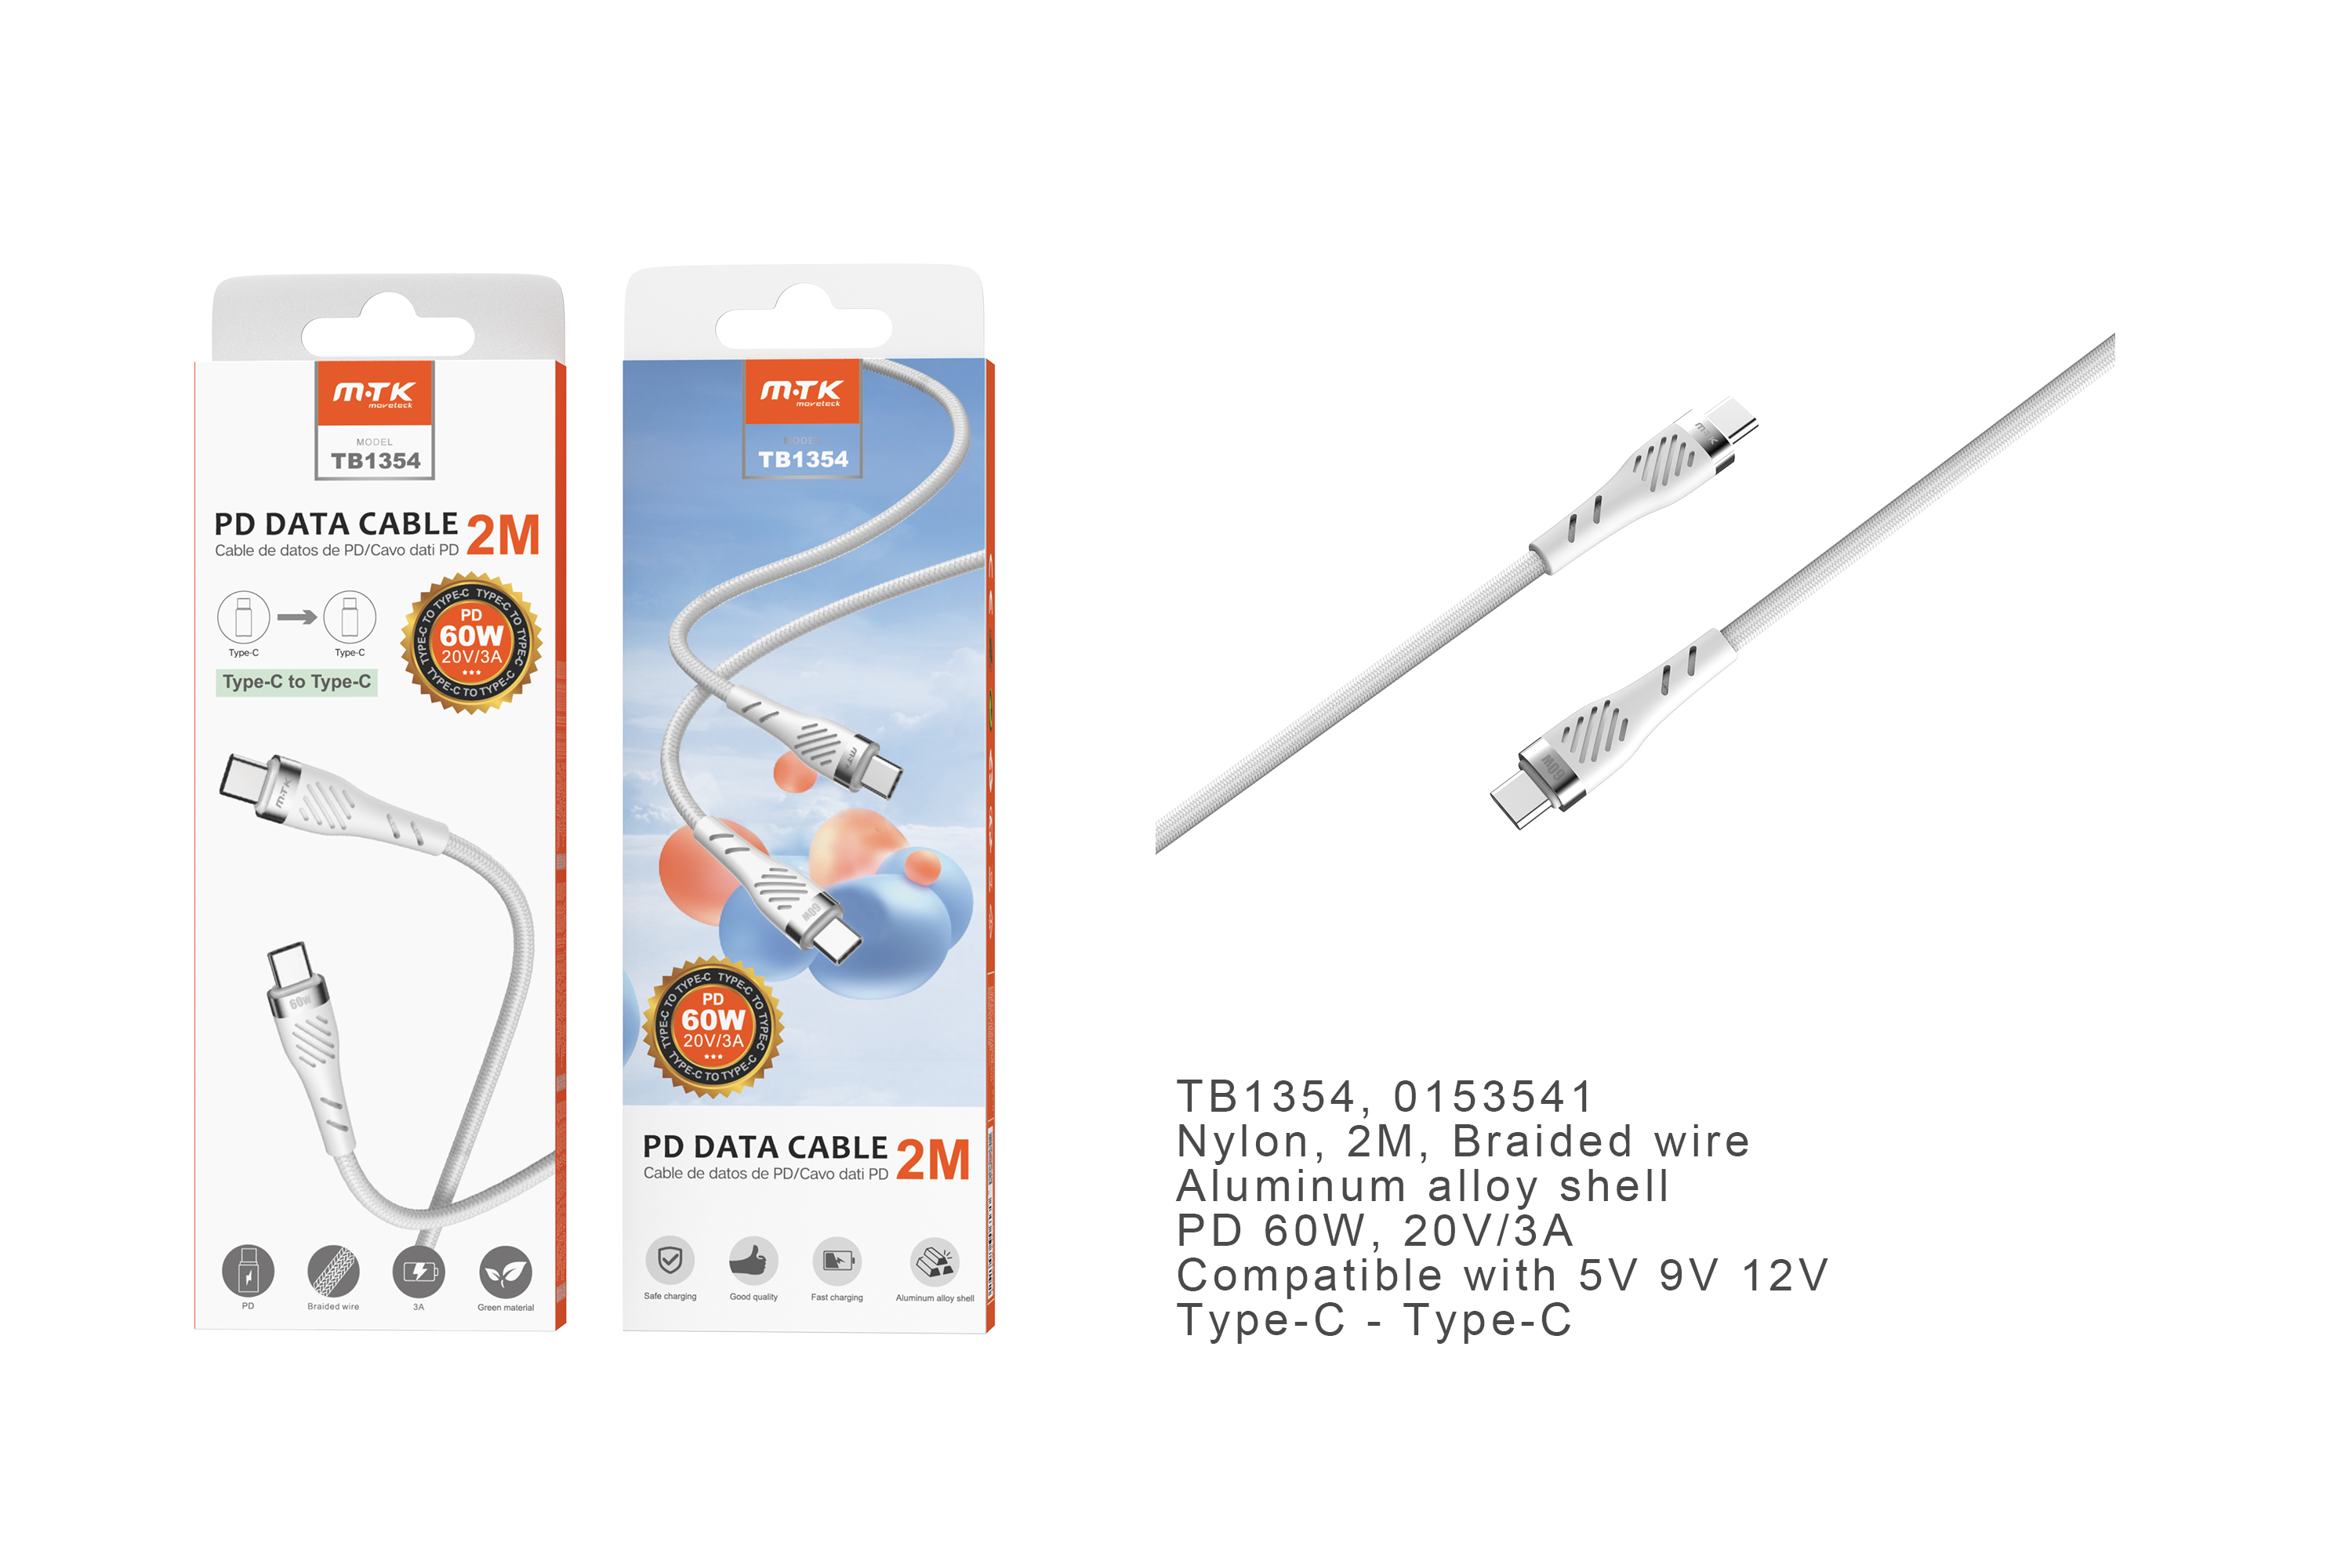 TB1354 BL Cable de datos Camyl nylon trenzado para Type-C a Type-C , Carga Rapida PD, 60W/20V/3A, 2M